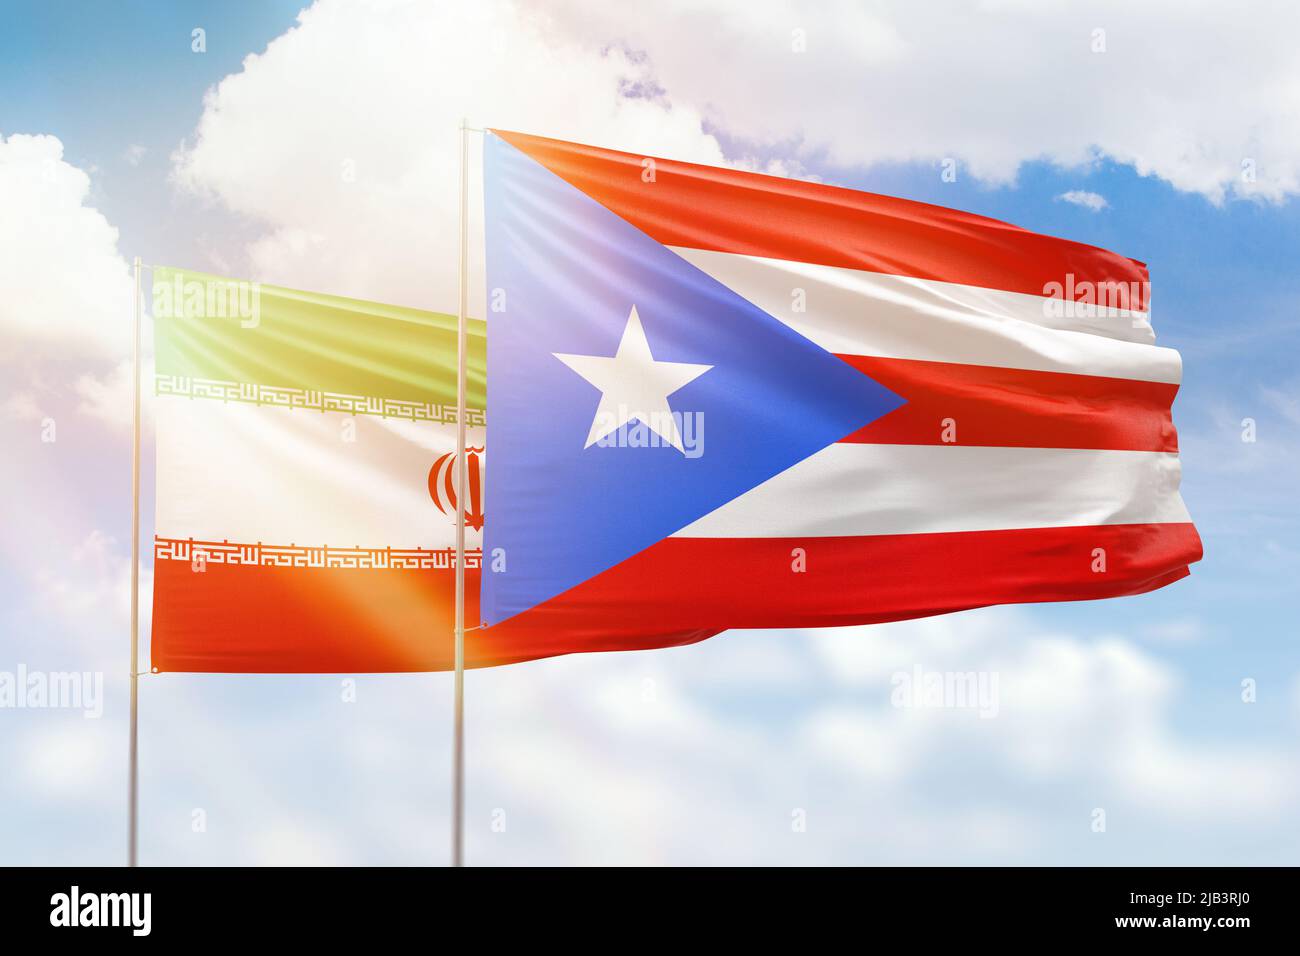 Bandera de irán puerto rico fotografías e imágenes de alta resolución -  Alamy